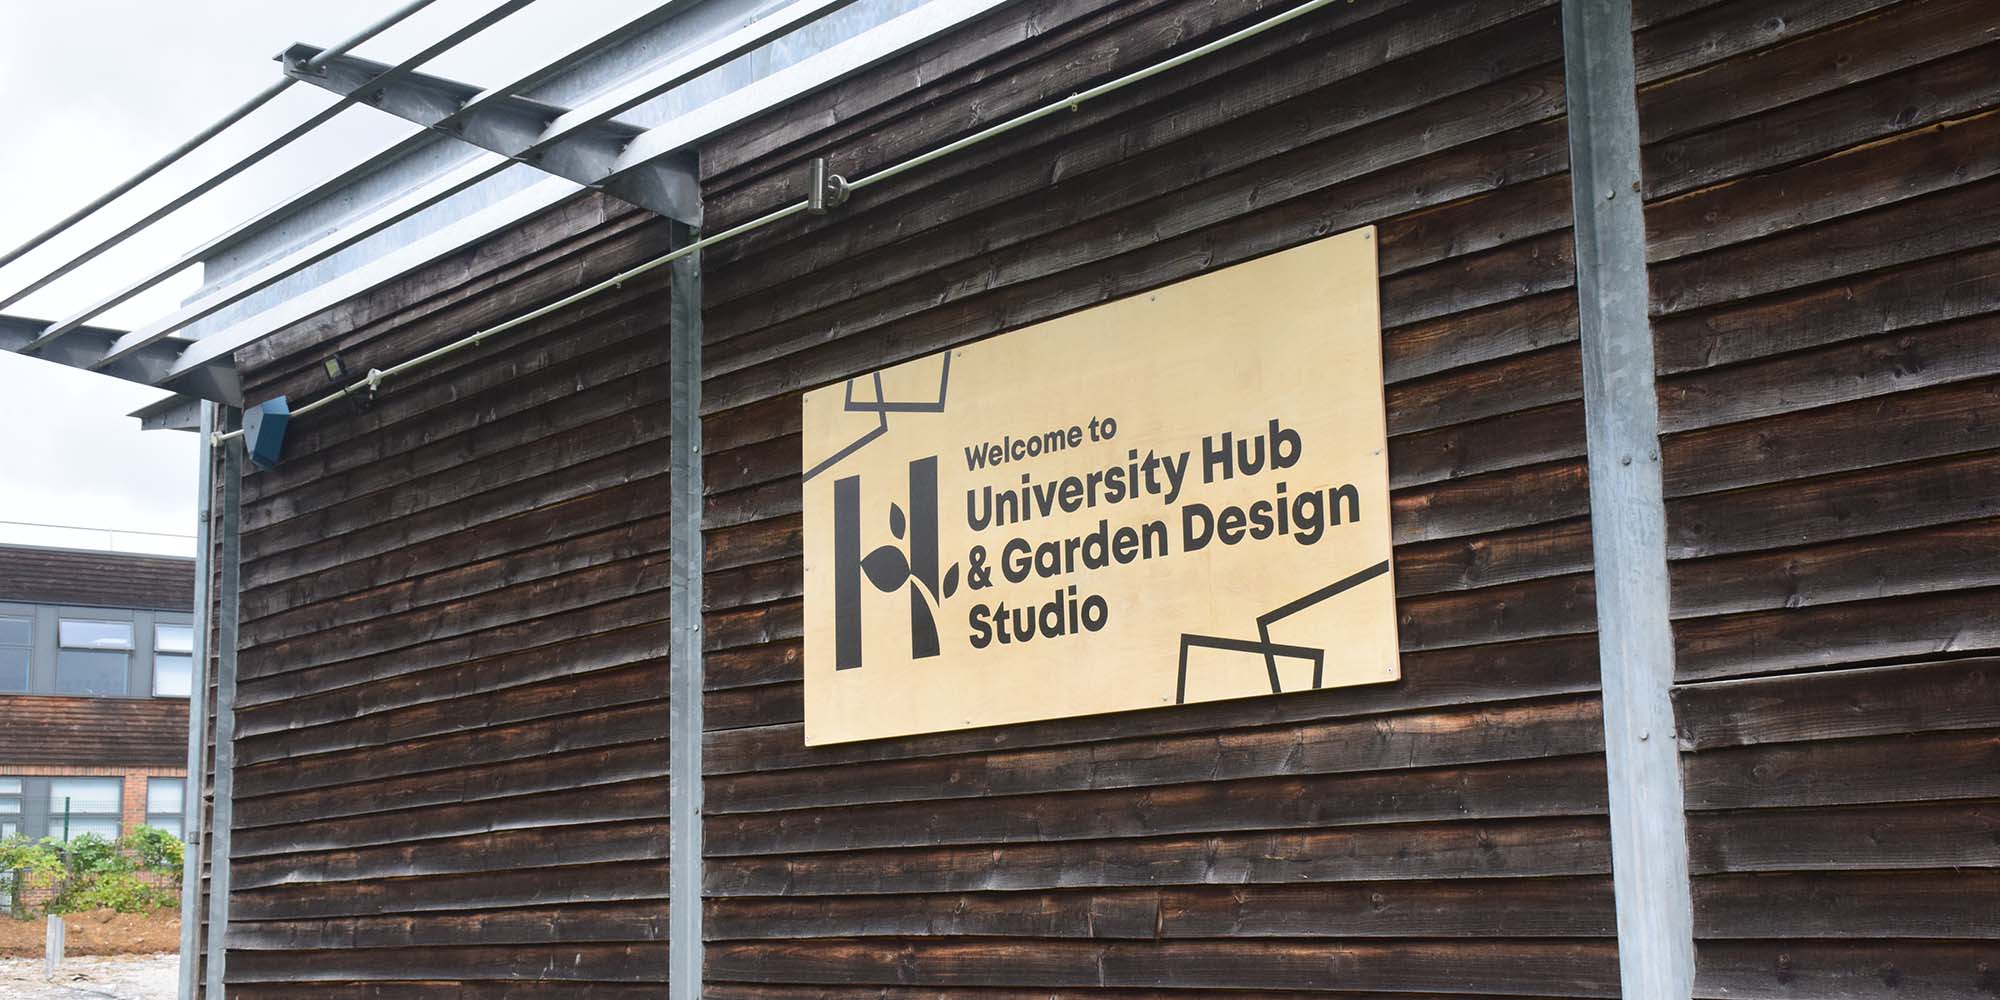 Hadlow University Hub signage on a building